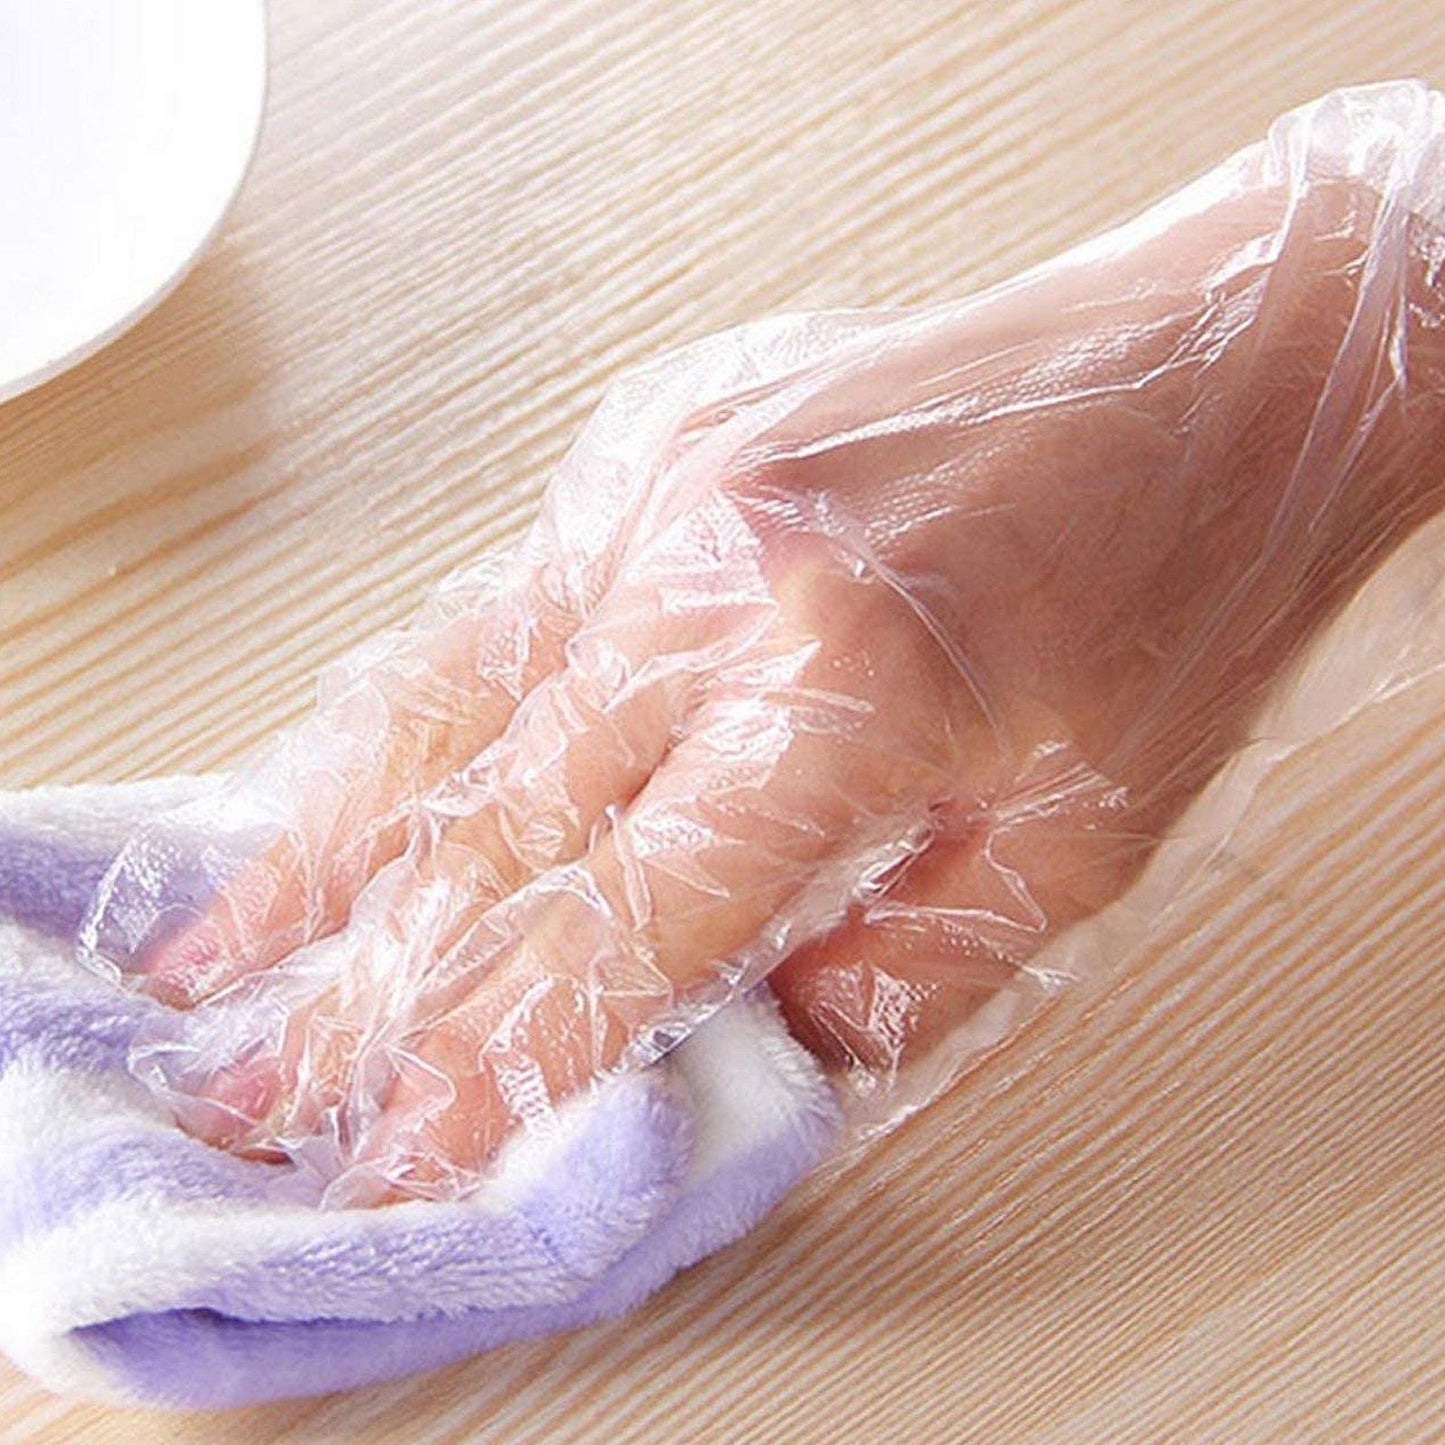 Food Safe Gloves, Latex-Free Gloves, Industrial Grade Disposable Gloves